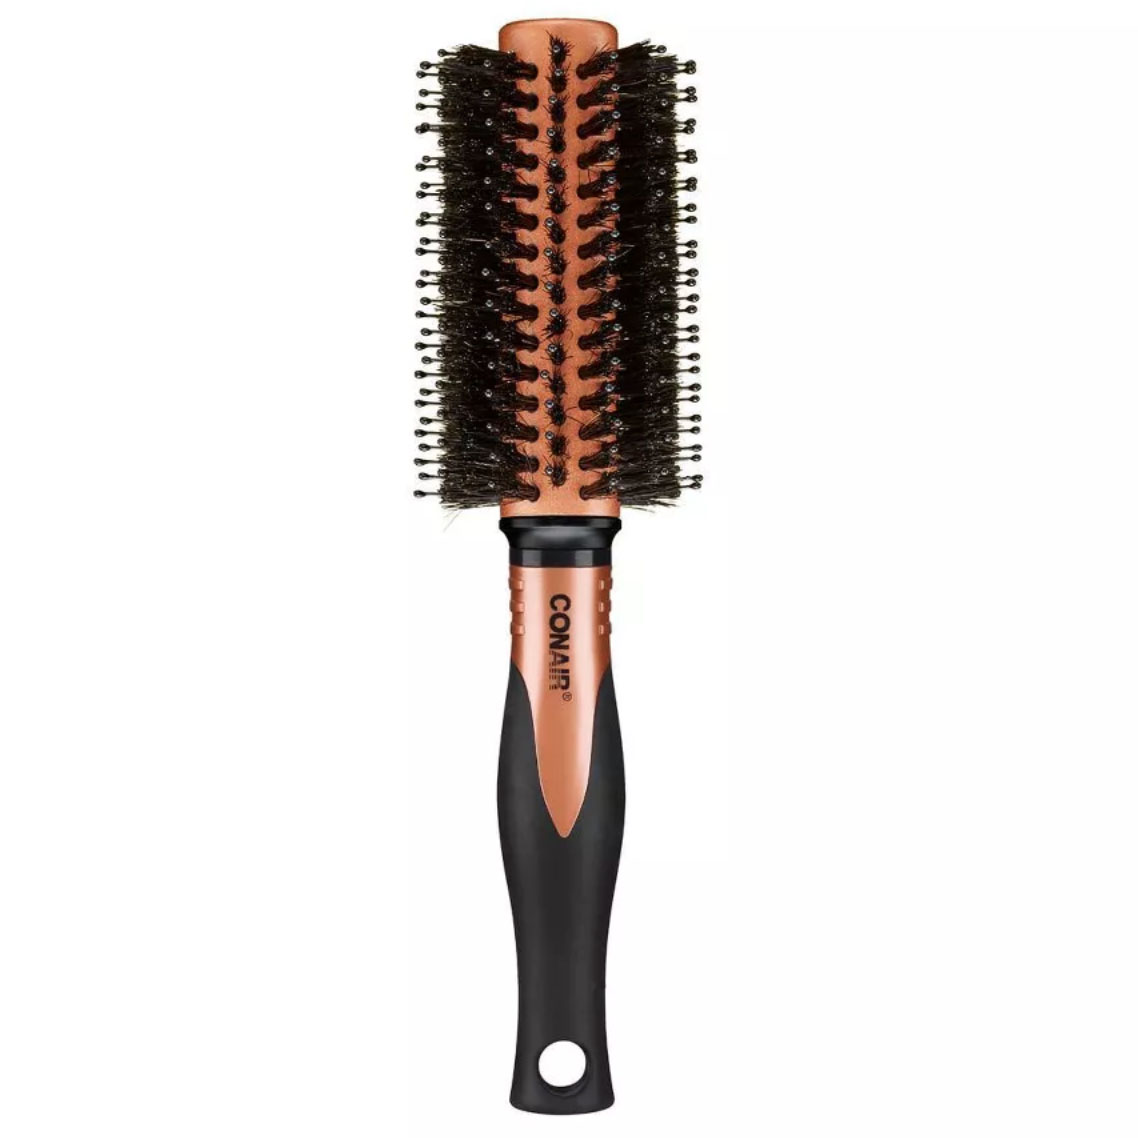 Conair Quick Blow-Dry Pro Porcupine Round Hair Brush